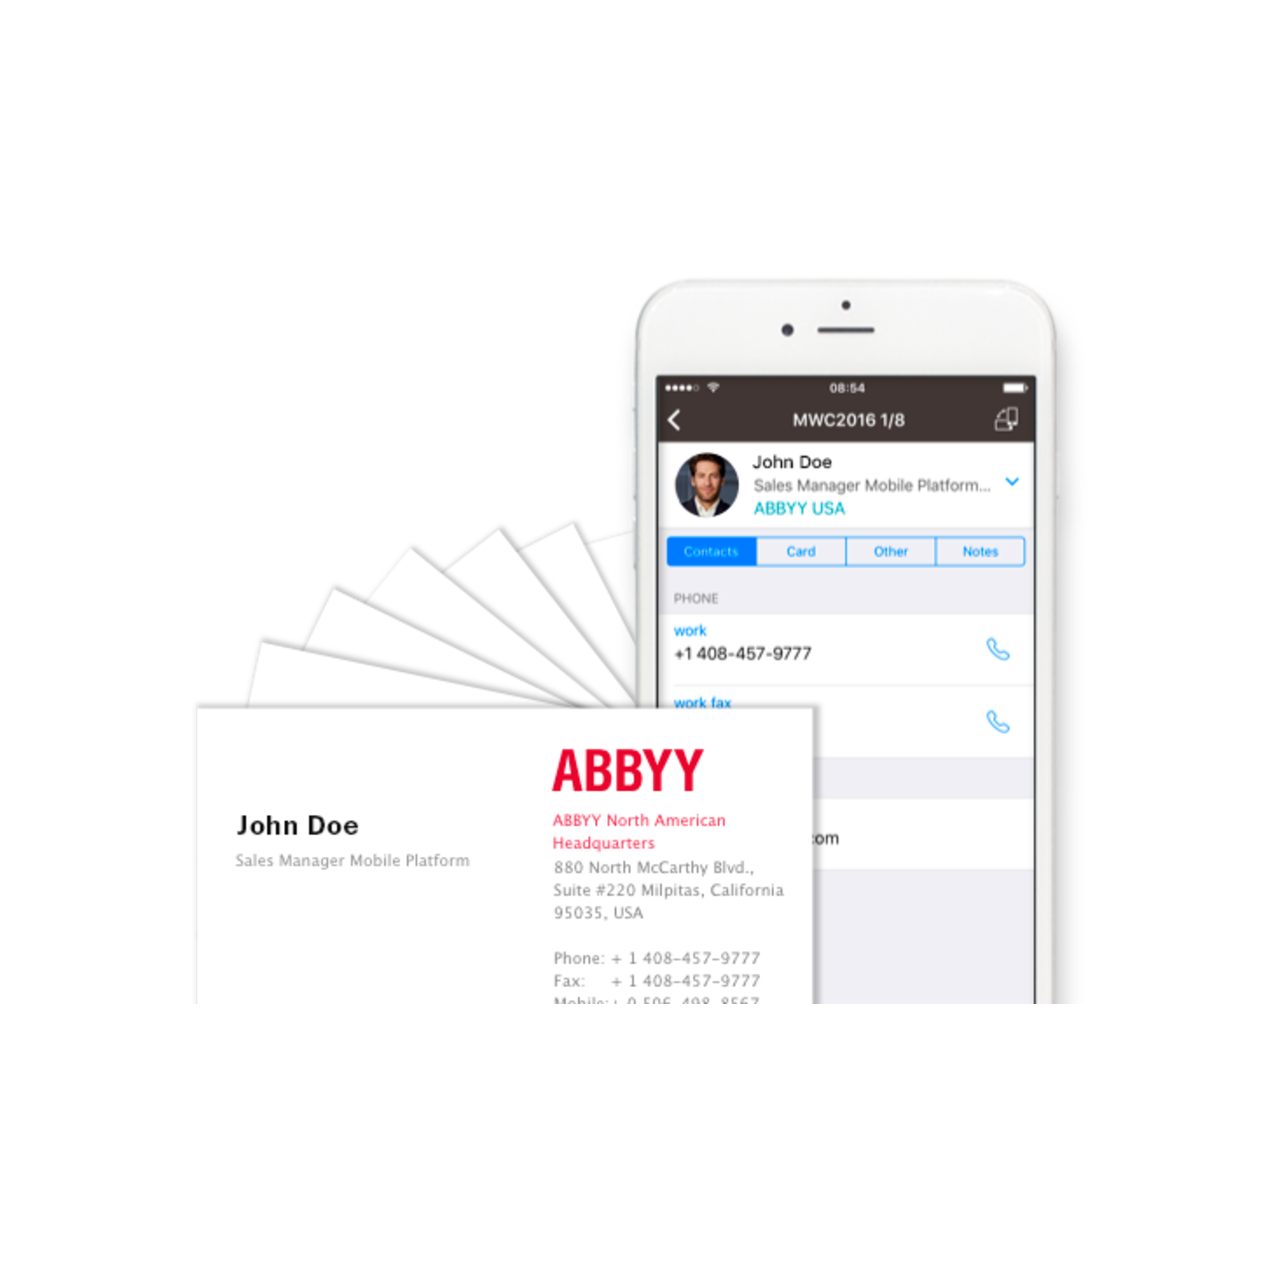 abbyy business card reader 2.0 for windows crack